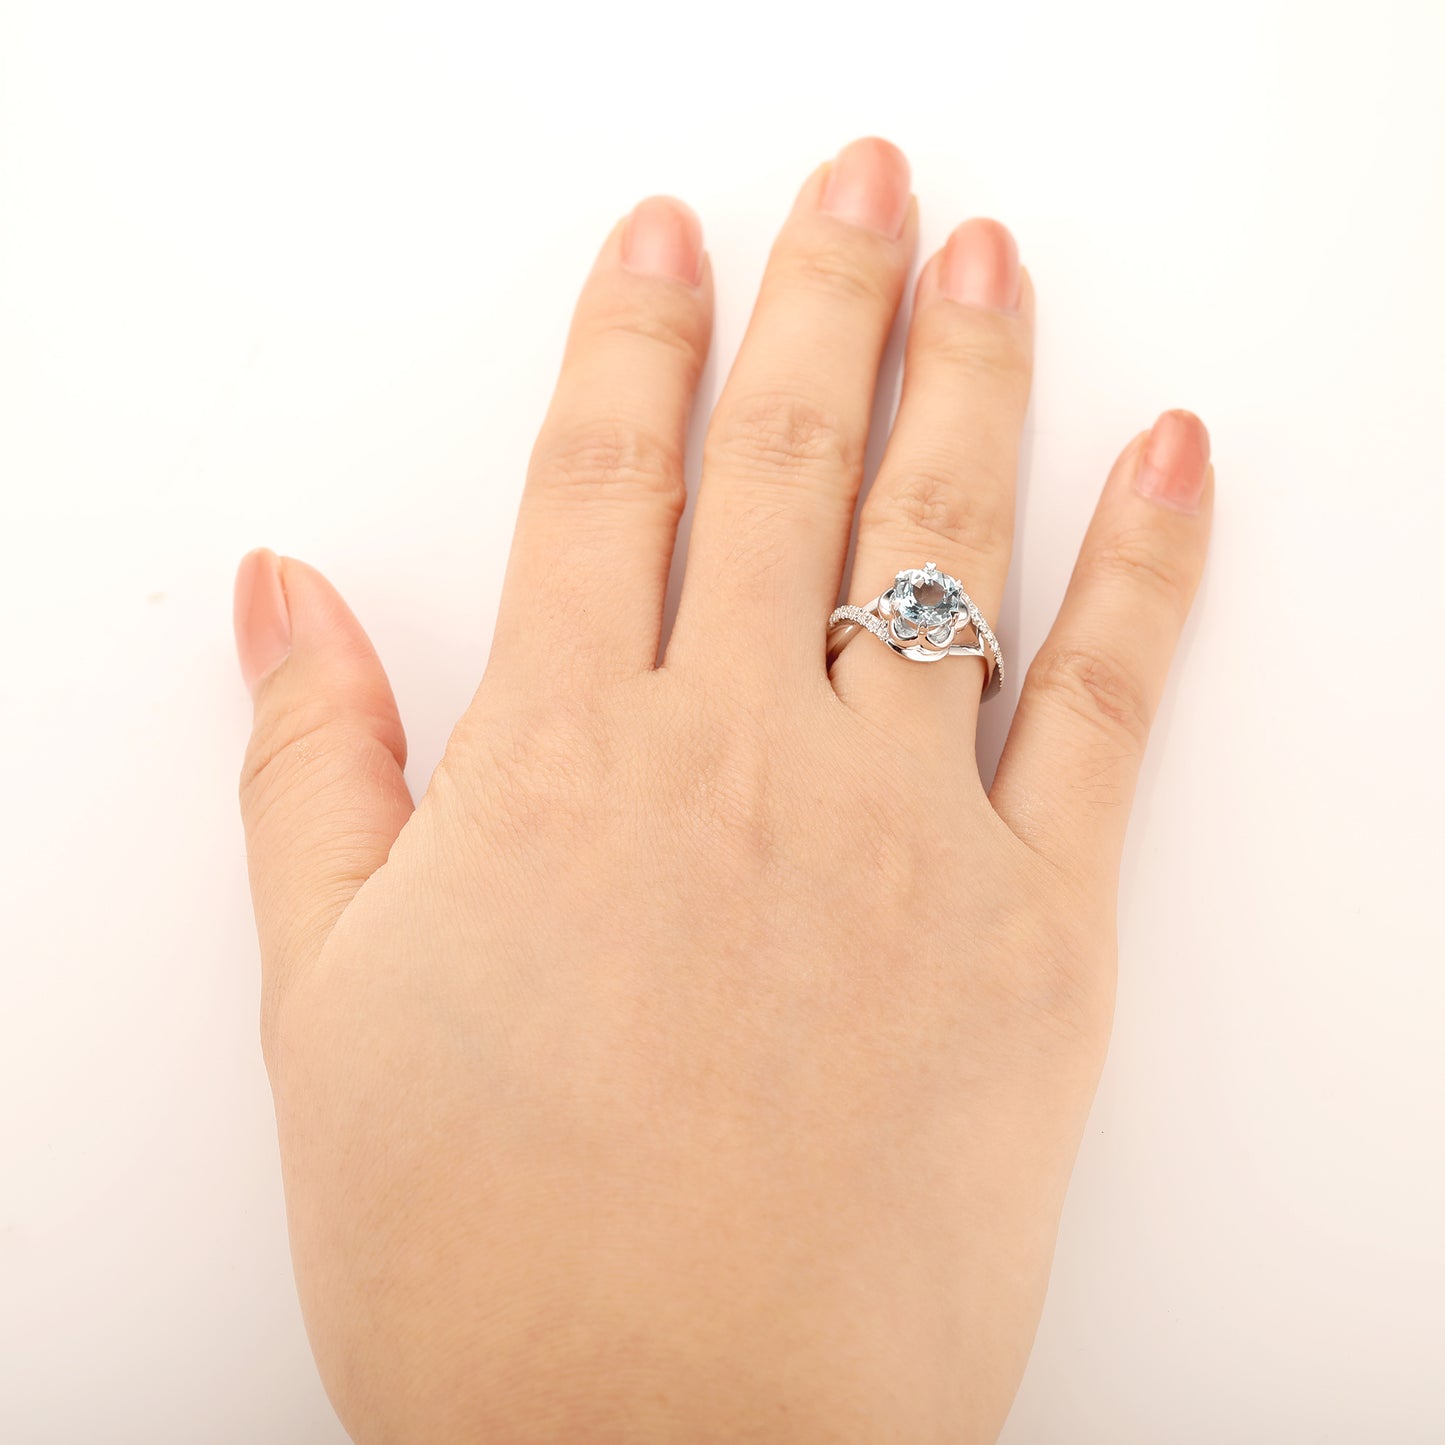 Natural Aquamarine Ring, Floral Round Cut 1CT Aquamarine Ring, Split Shanks Accents 14k White Gold Engagement Ring